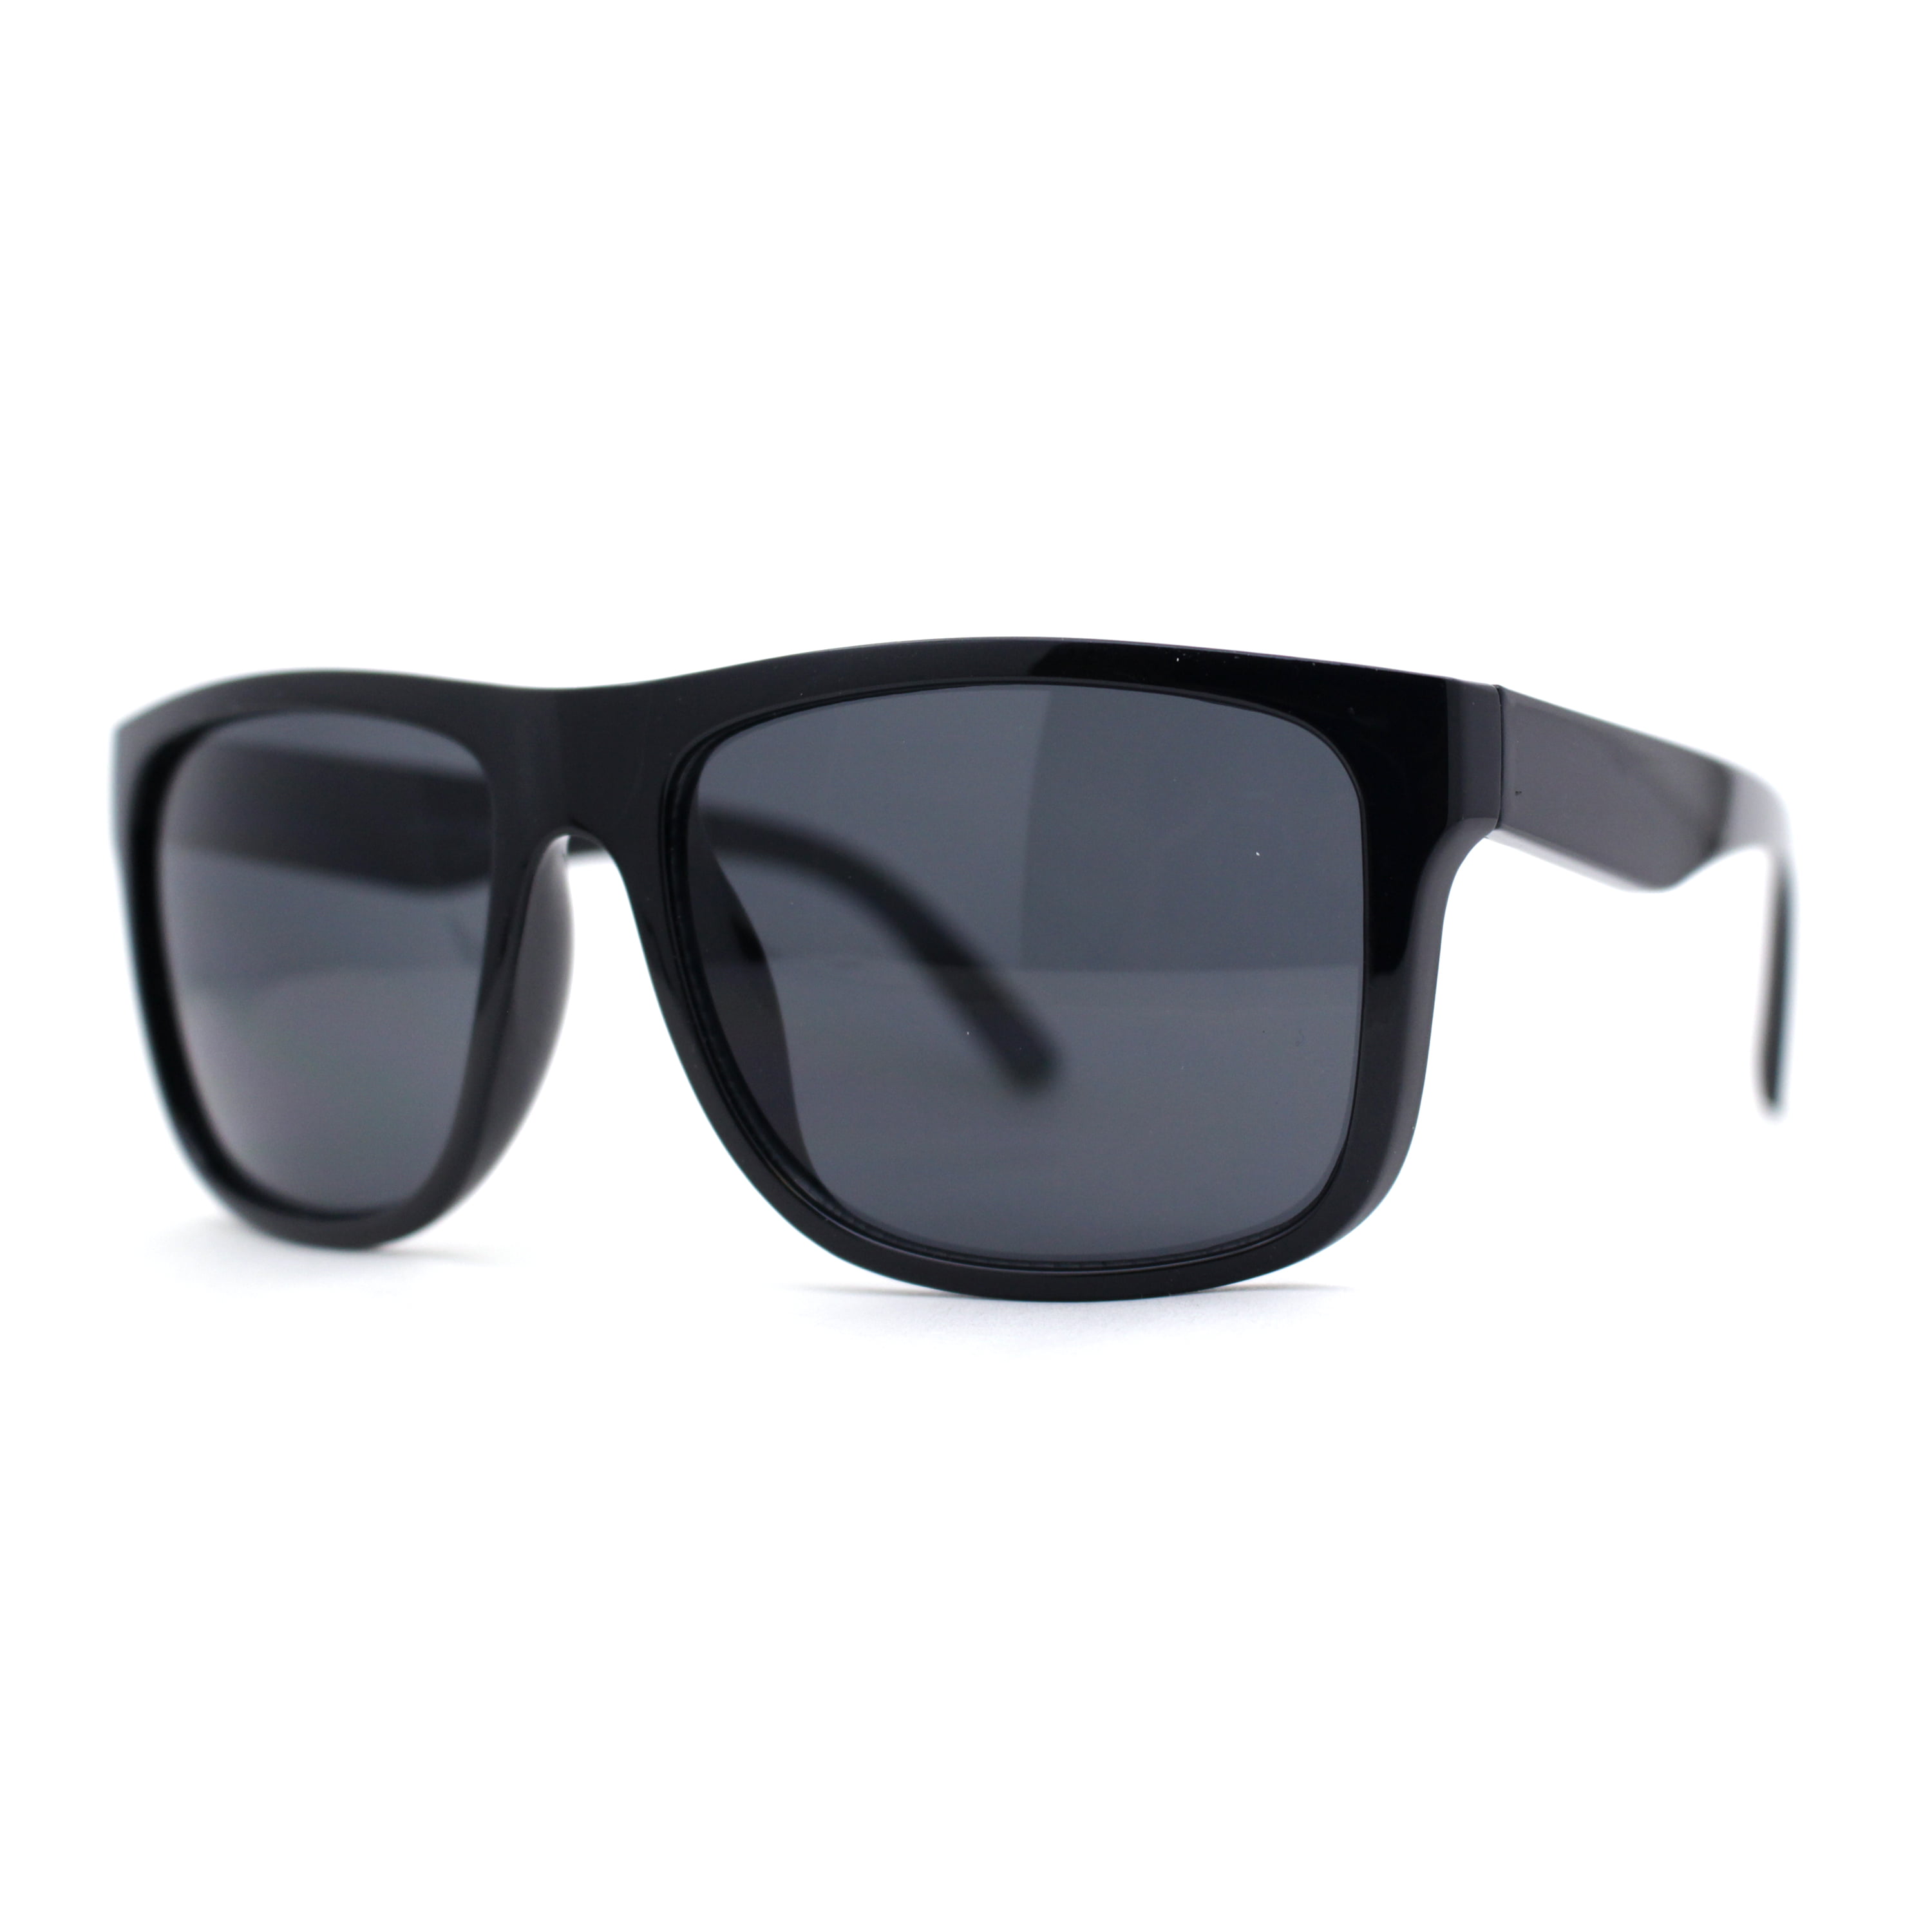 Update 217+ dark black sunglasses mens best